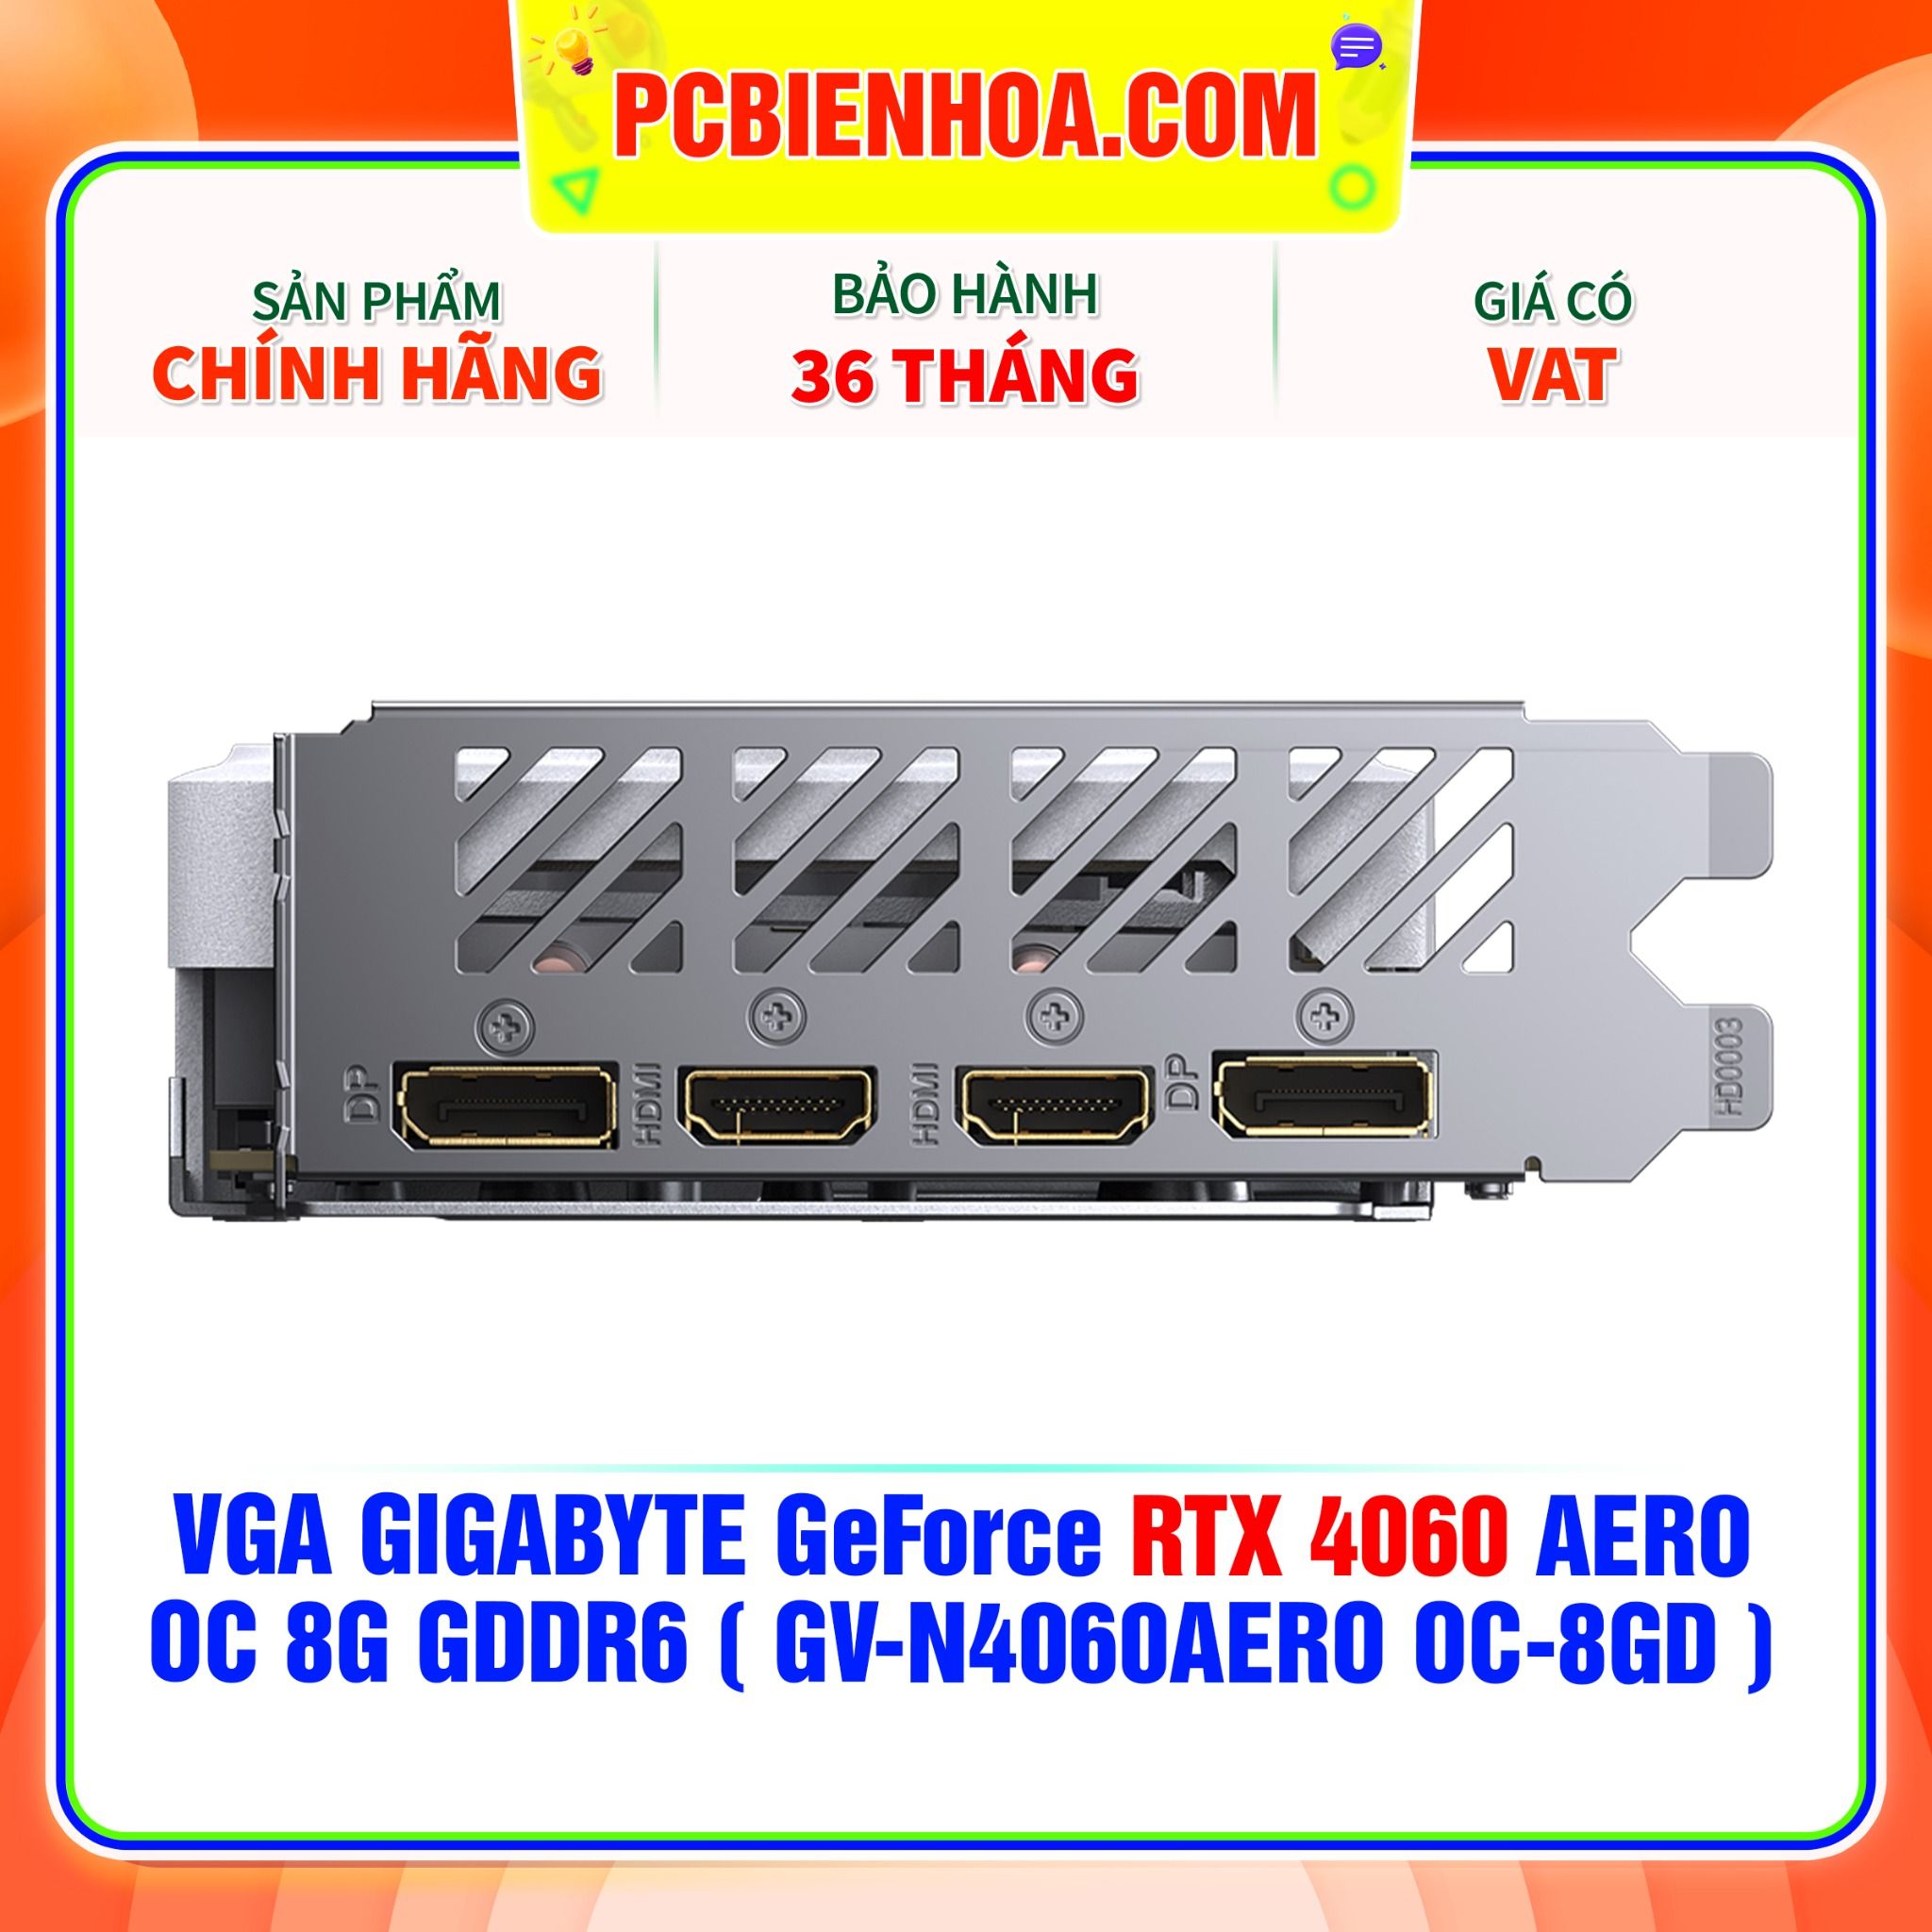  VGA GIGABYTE GeForce RTX 4060 AERO OC 8G GDDR6 ( GV-N4060AERO OC-8GD ) 